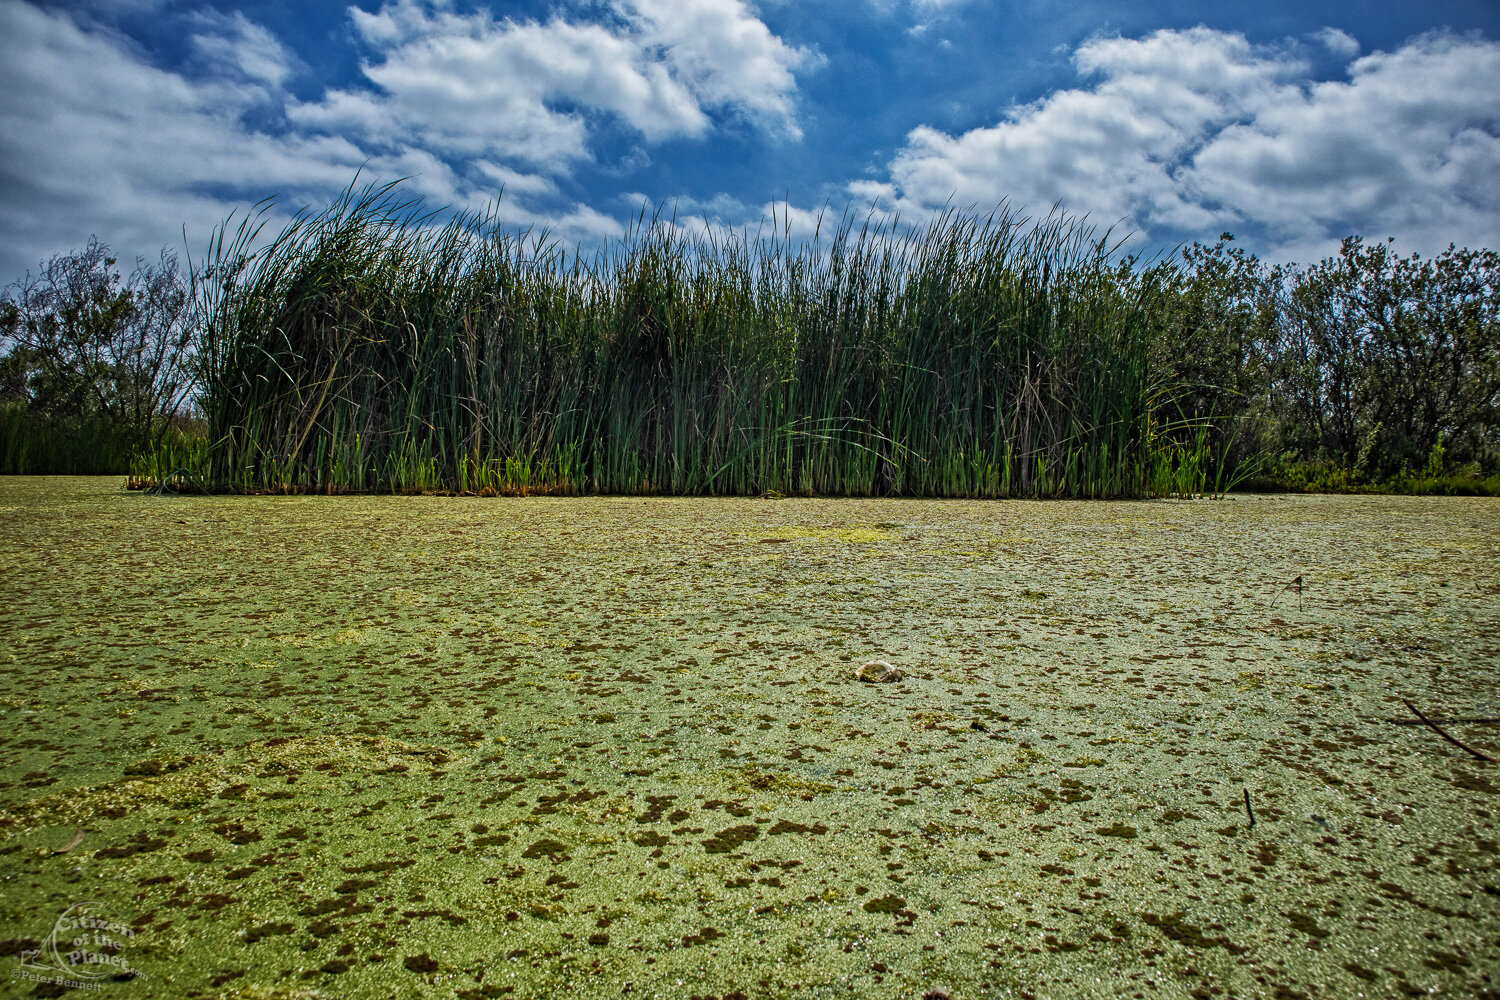  Algae Bloom in Ballona wetlands. 